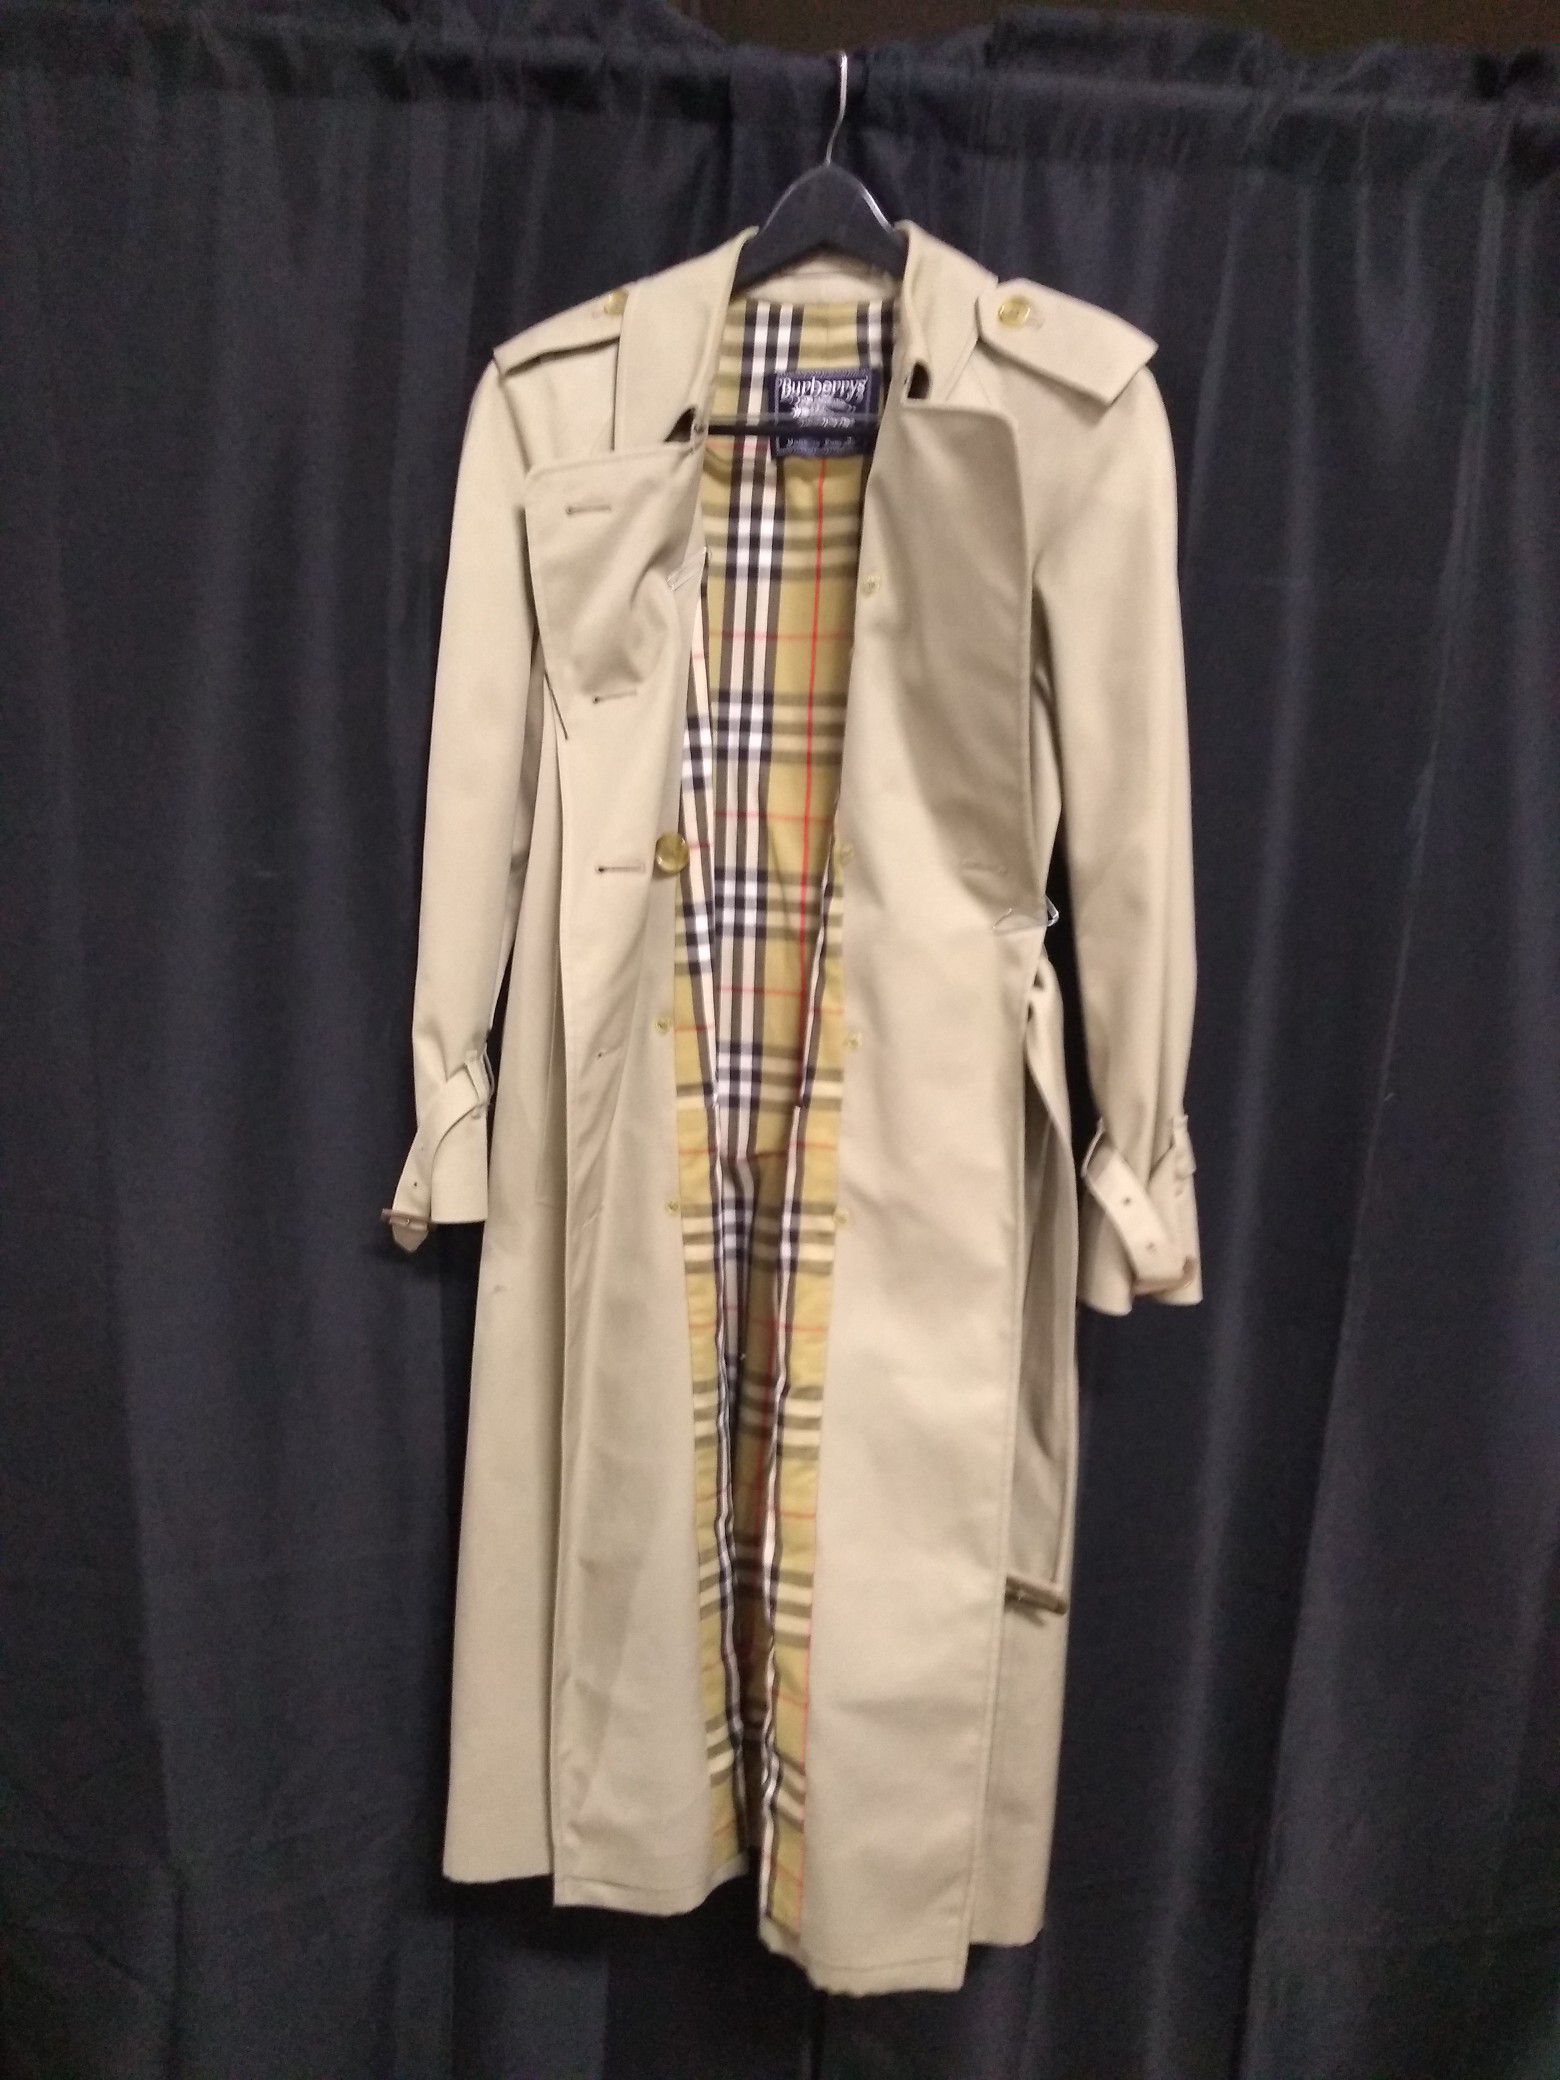 Burberrys' trench coat